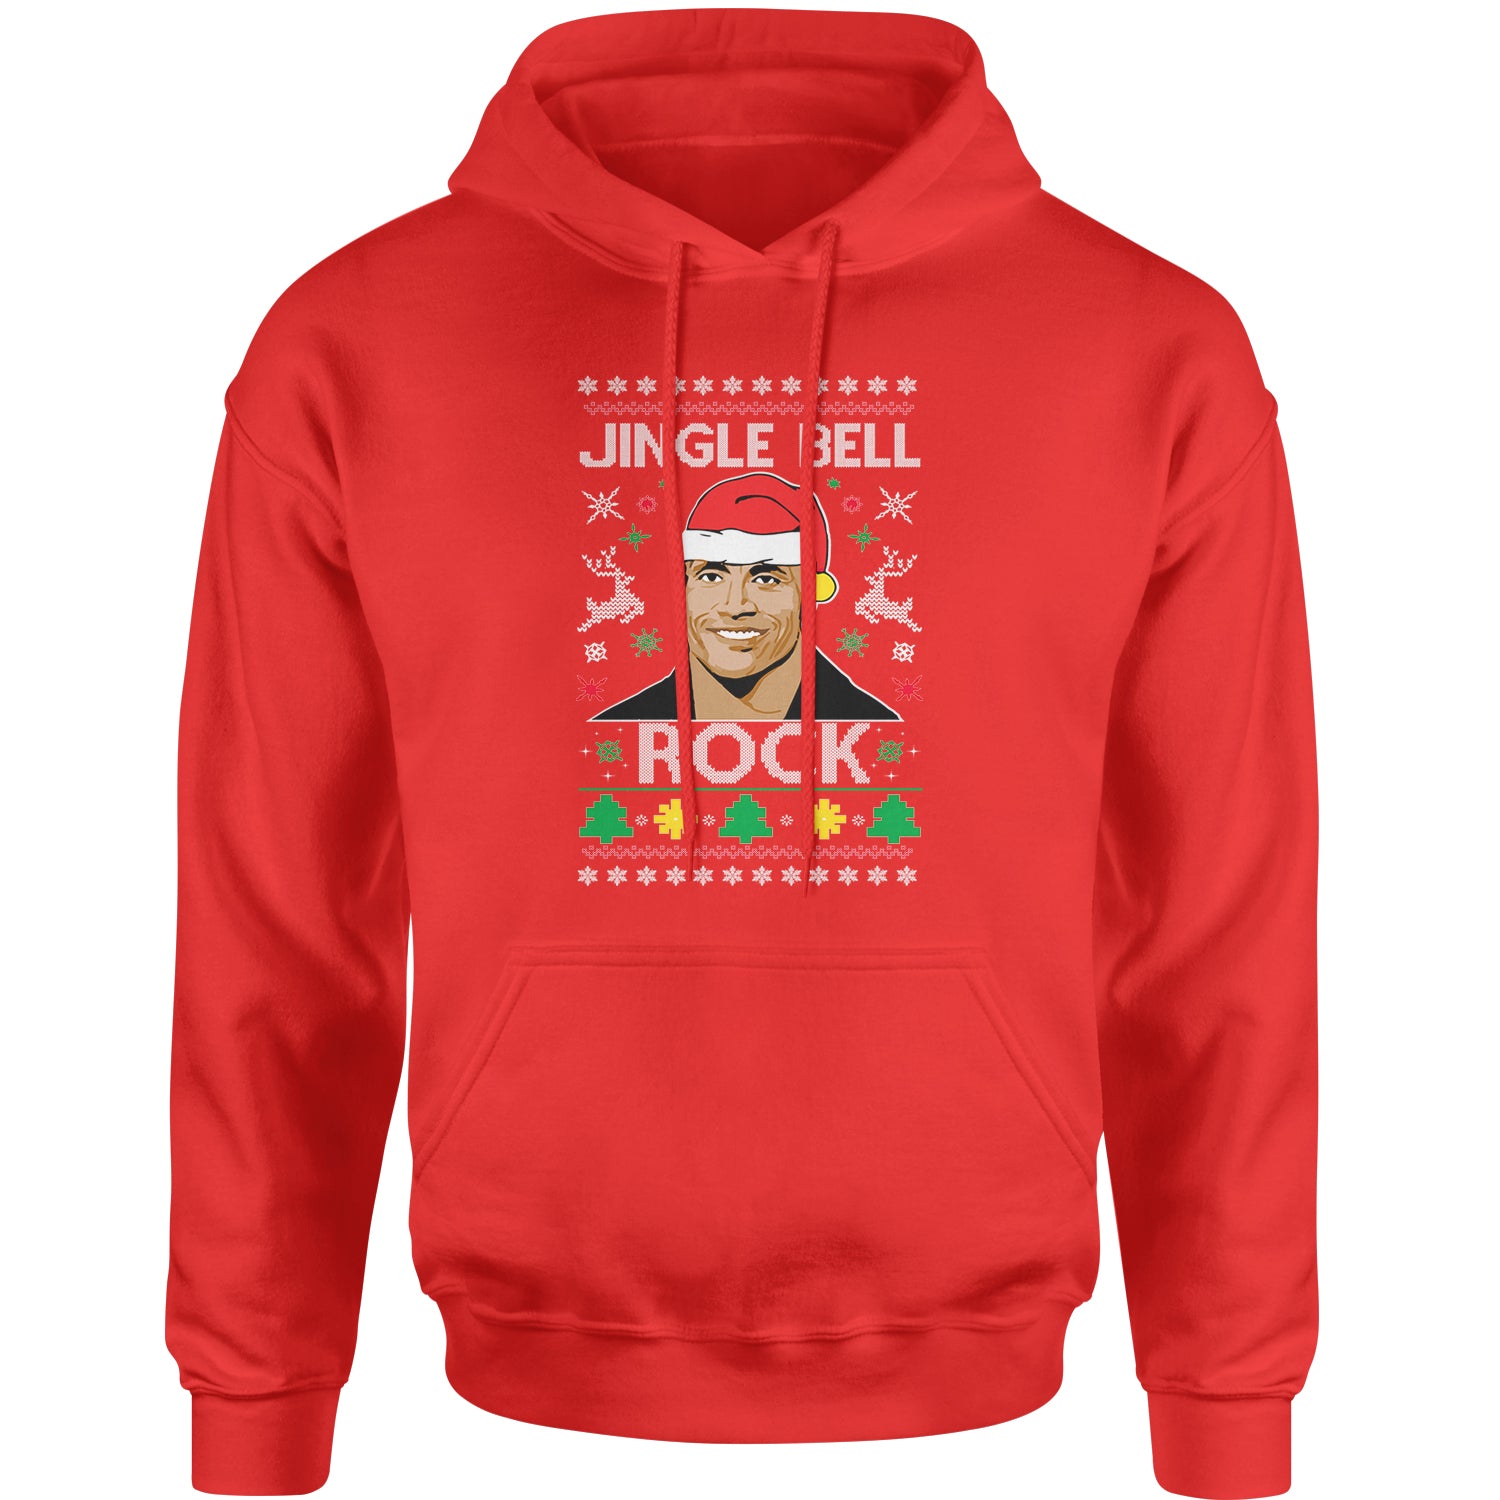 Jingle Bell Rock Ugly Christmas Adult Hoodie Sweatshirt 2018, champ, Christmas, dwayne, johnson, peoples, rock, Sweatshirts, the, Ugly by Expression Tees